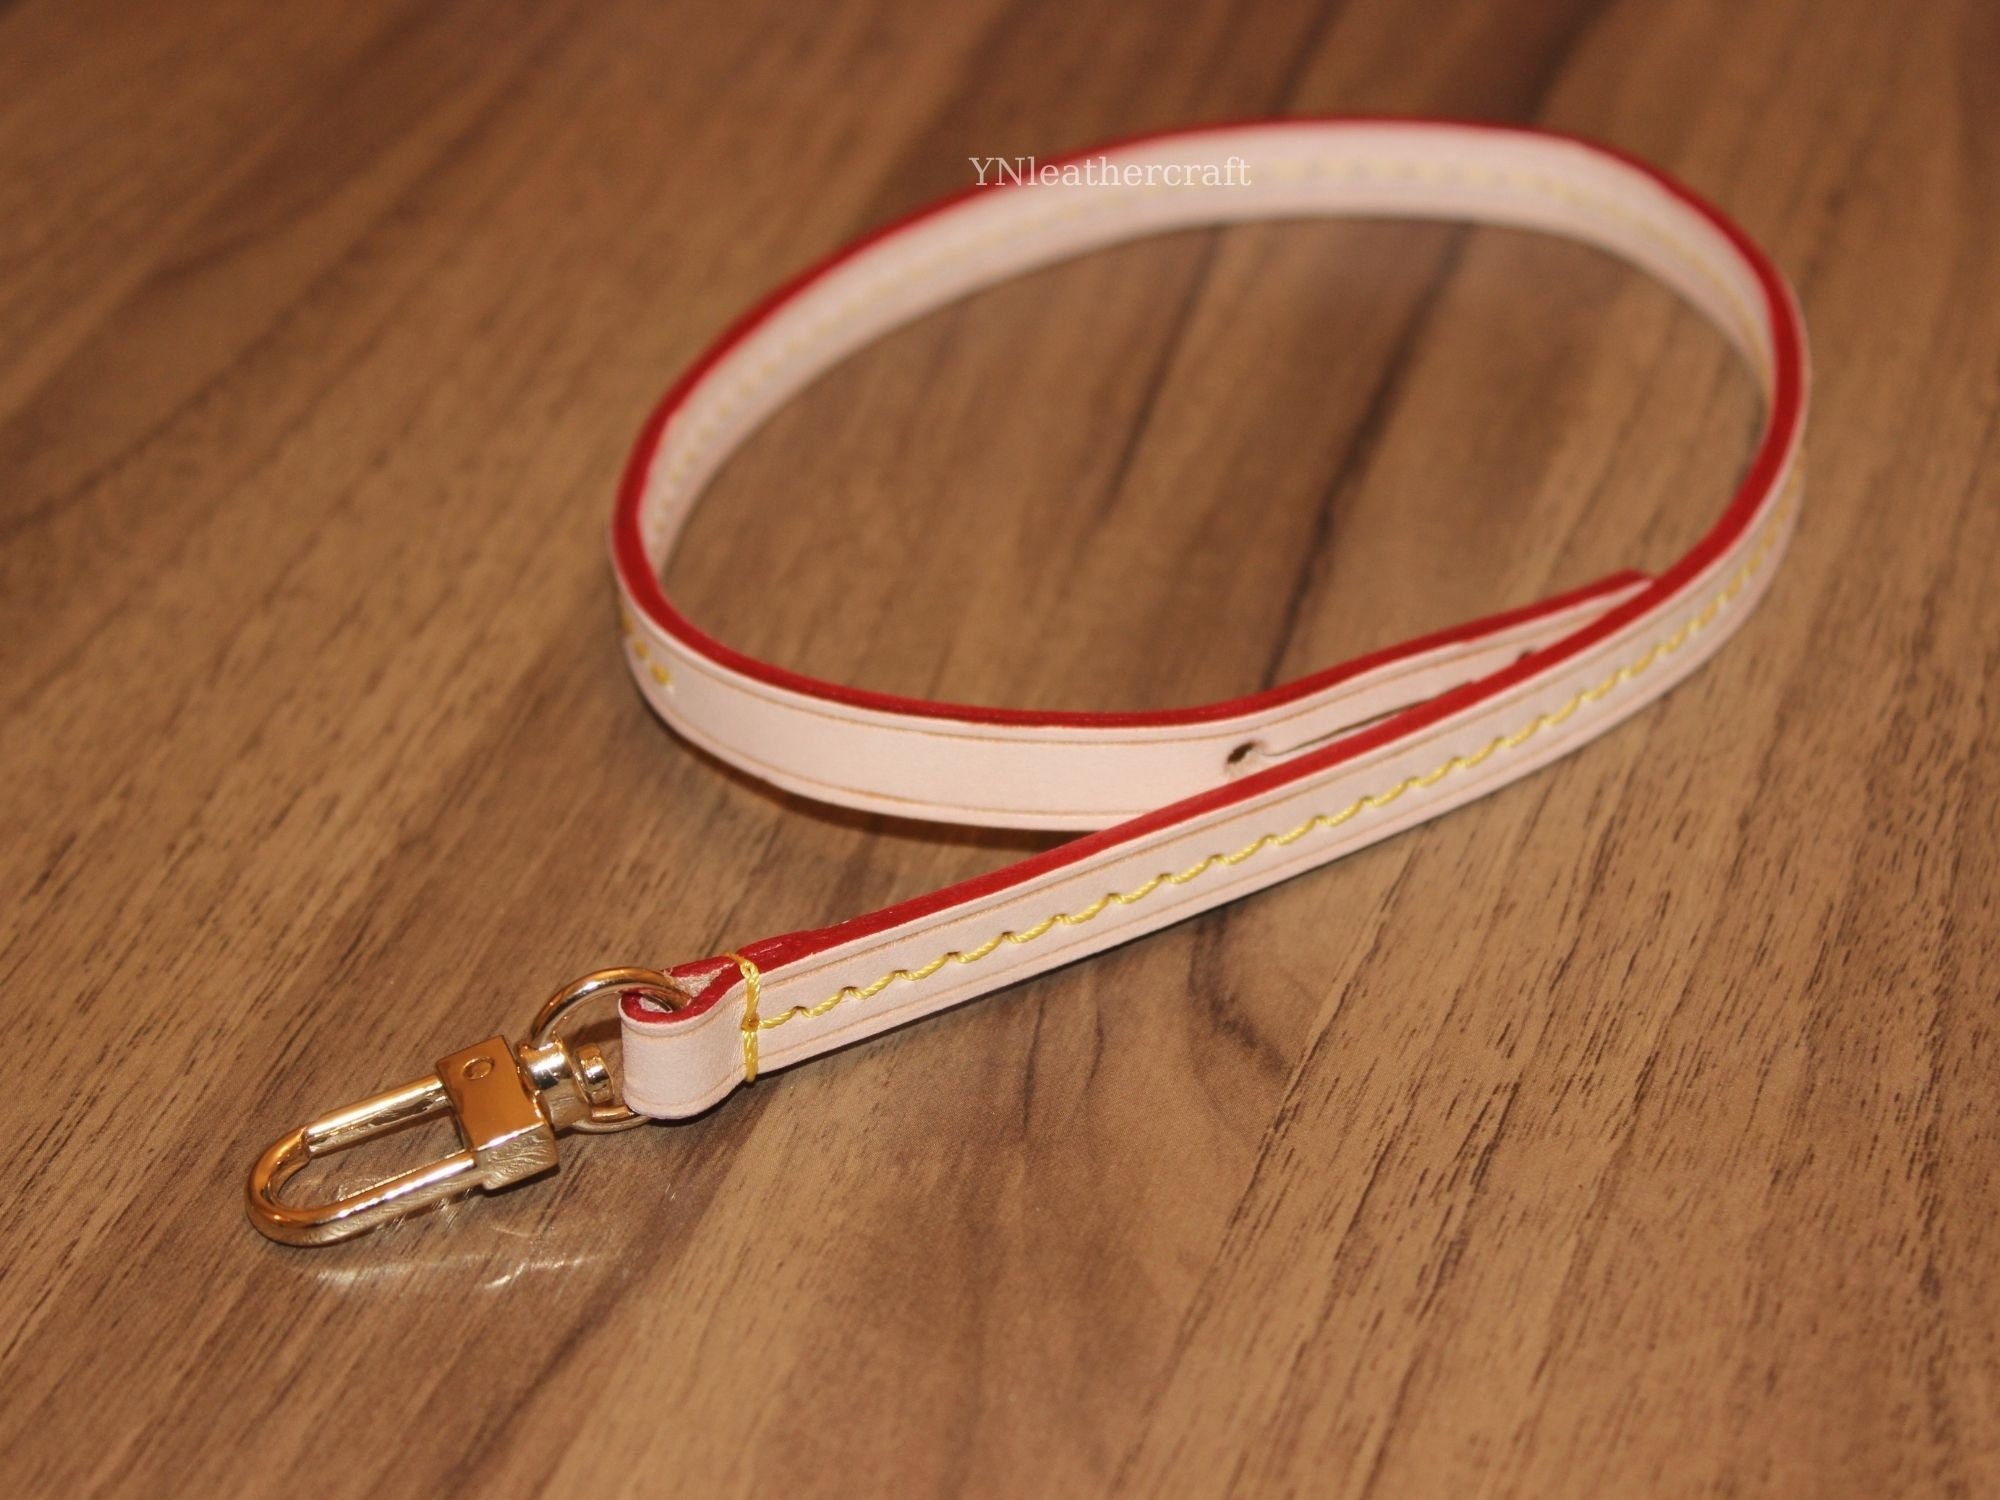 Handmade Pochette Mini Shoulder Strap Replacement D-ring 